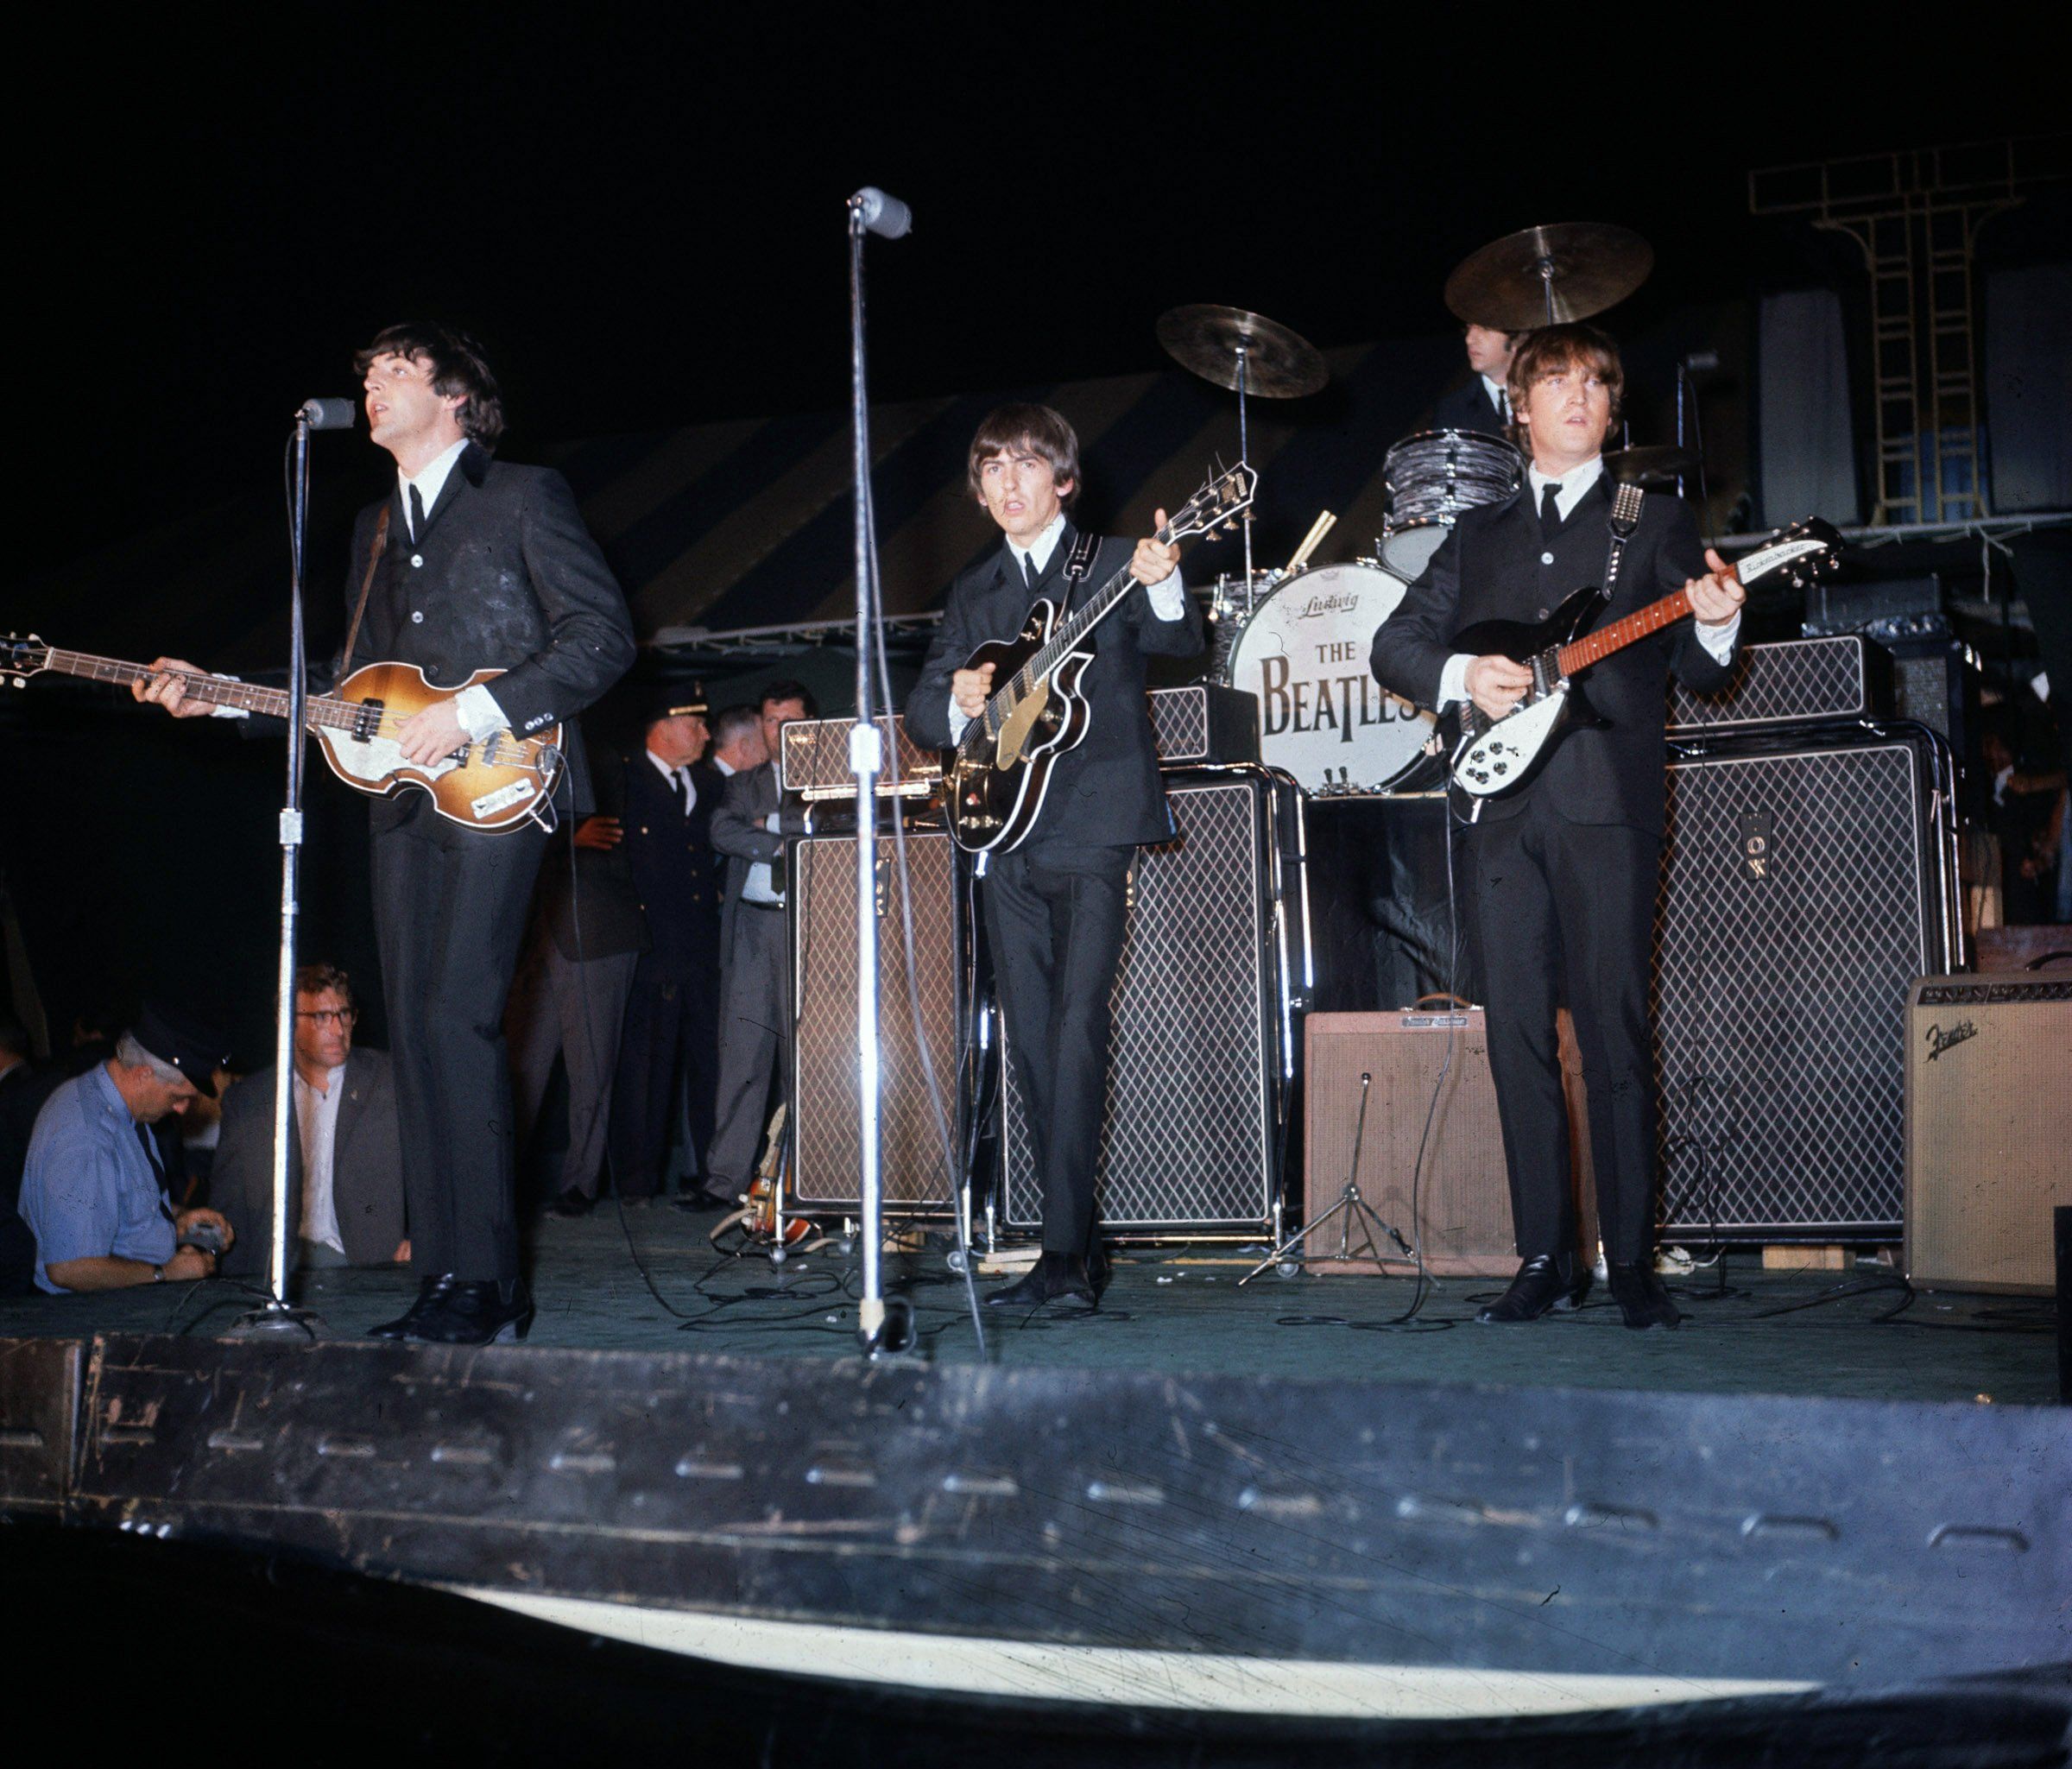 Группа на на первый концерт. Битлз в США 1964 первый концерт. The Beatles концерт 1963. Первый концерт Битлз. Битлз 1965.